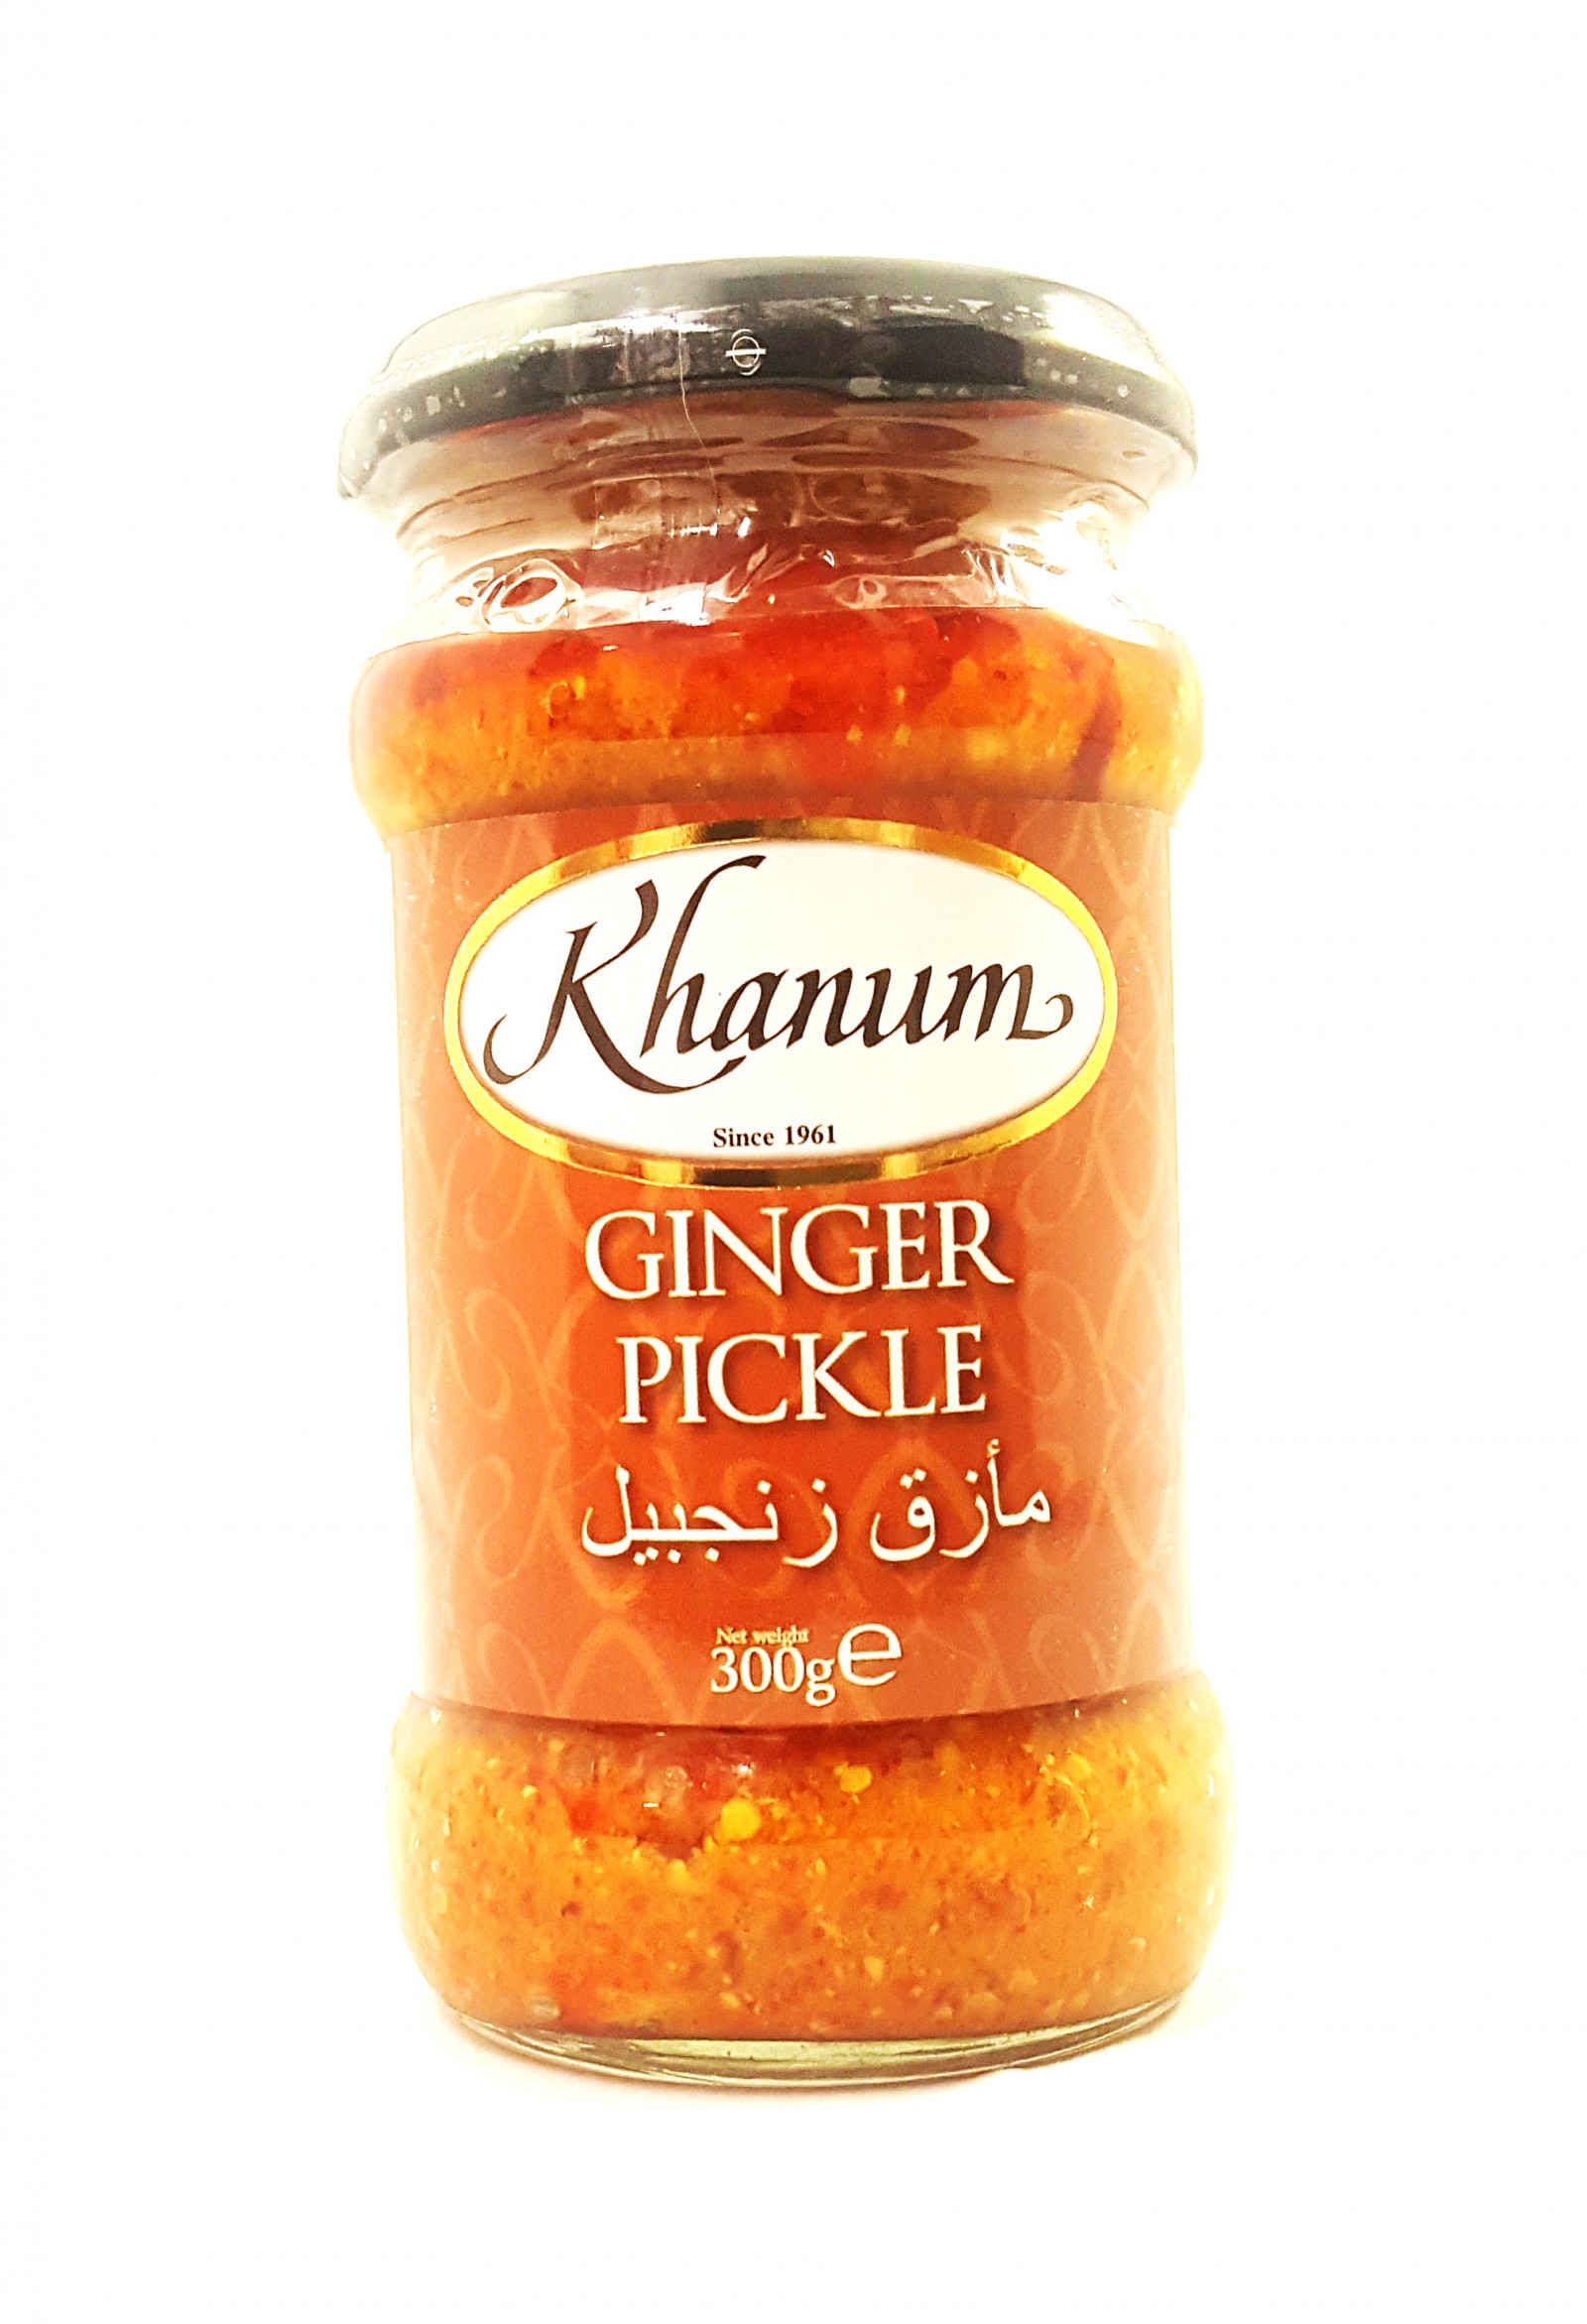 Khanum Ginger Pickle 300g - Preserved food | Sing Kee